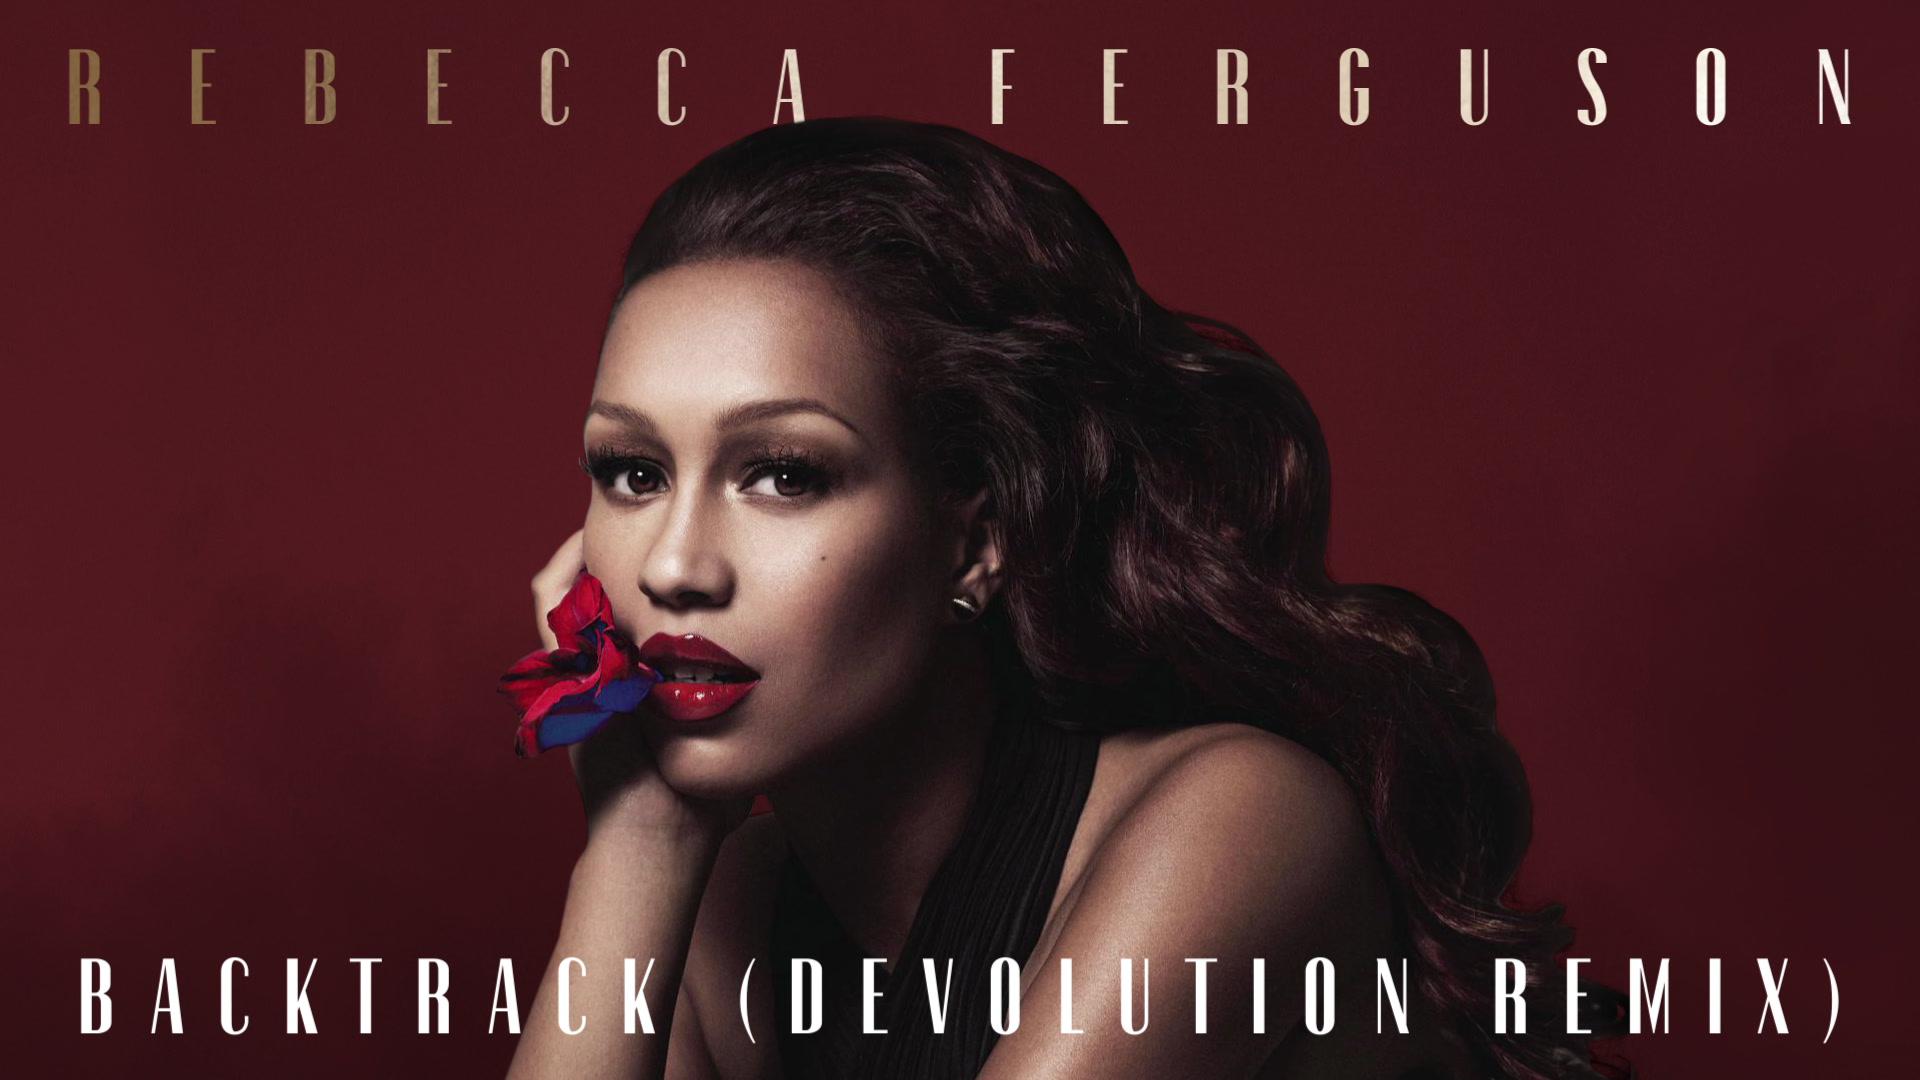 Rebecca Ferguson - Backtrack (DEVolution Remix - Official Audio)